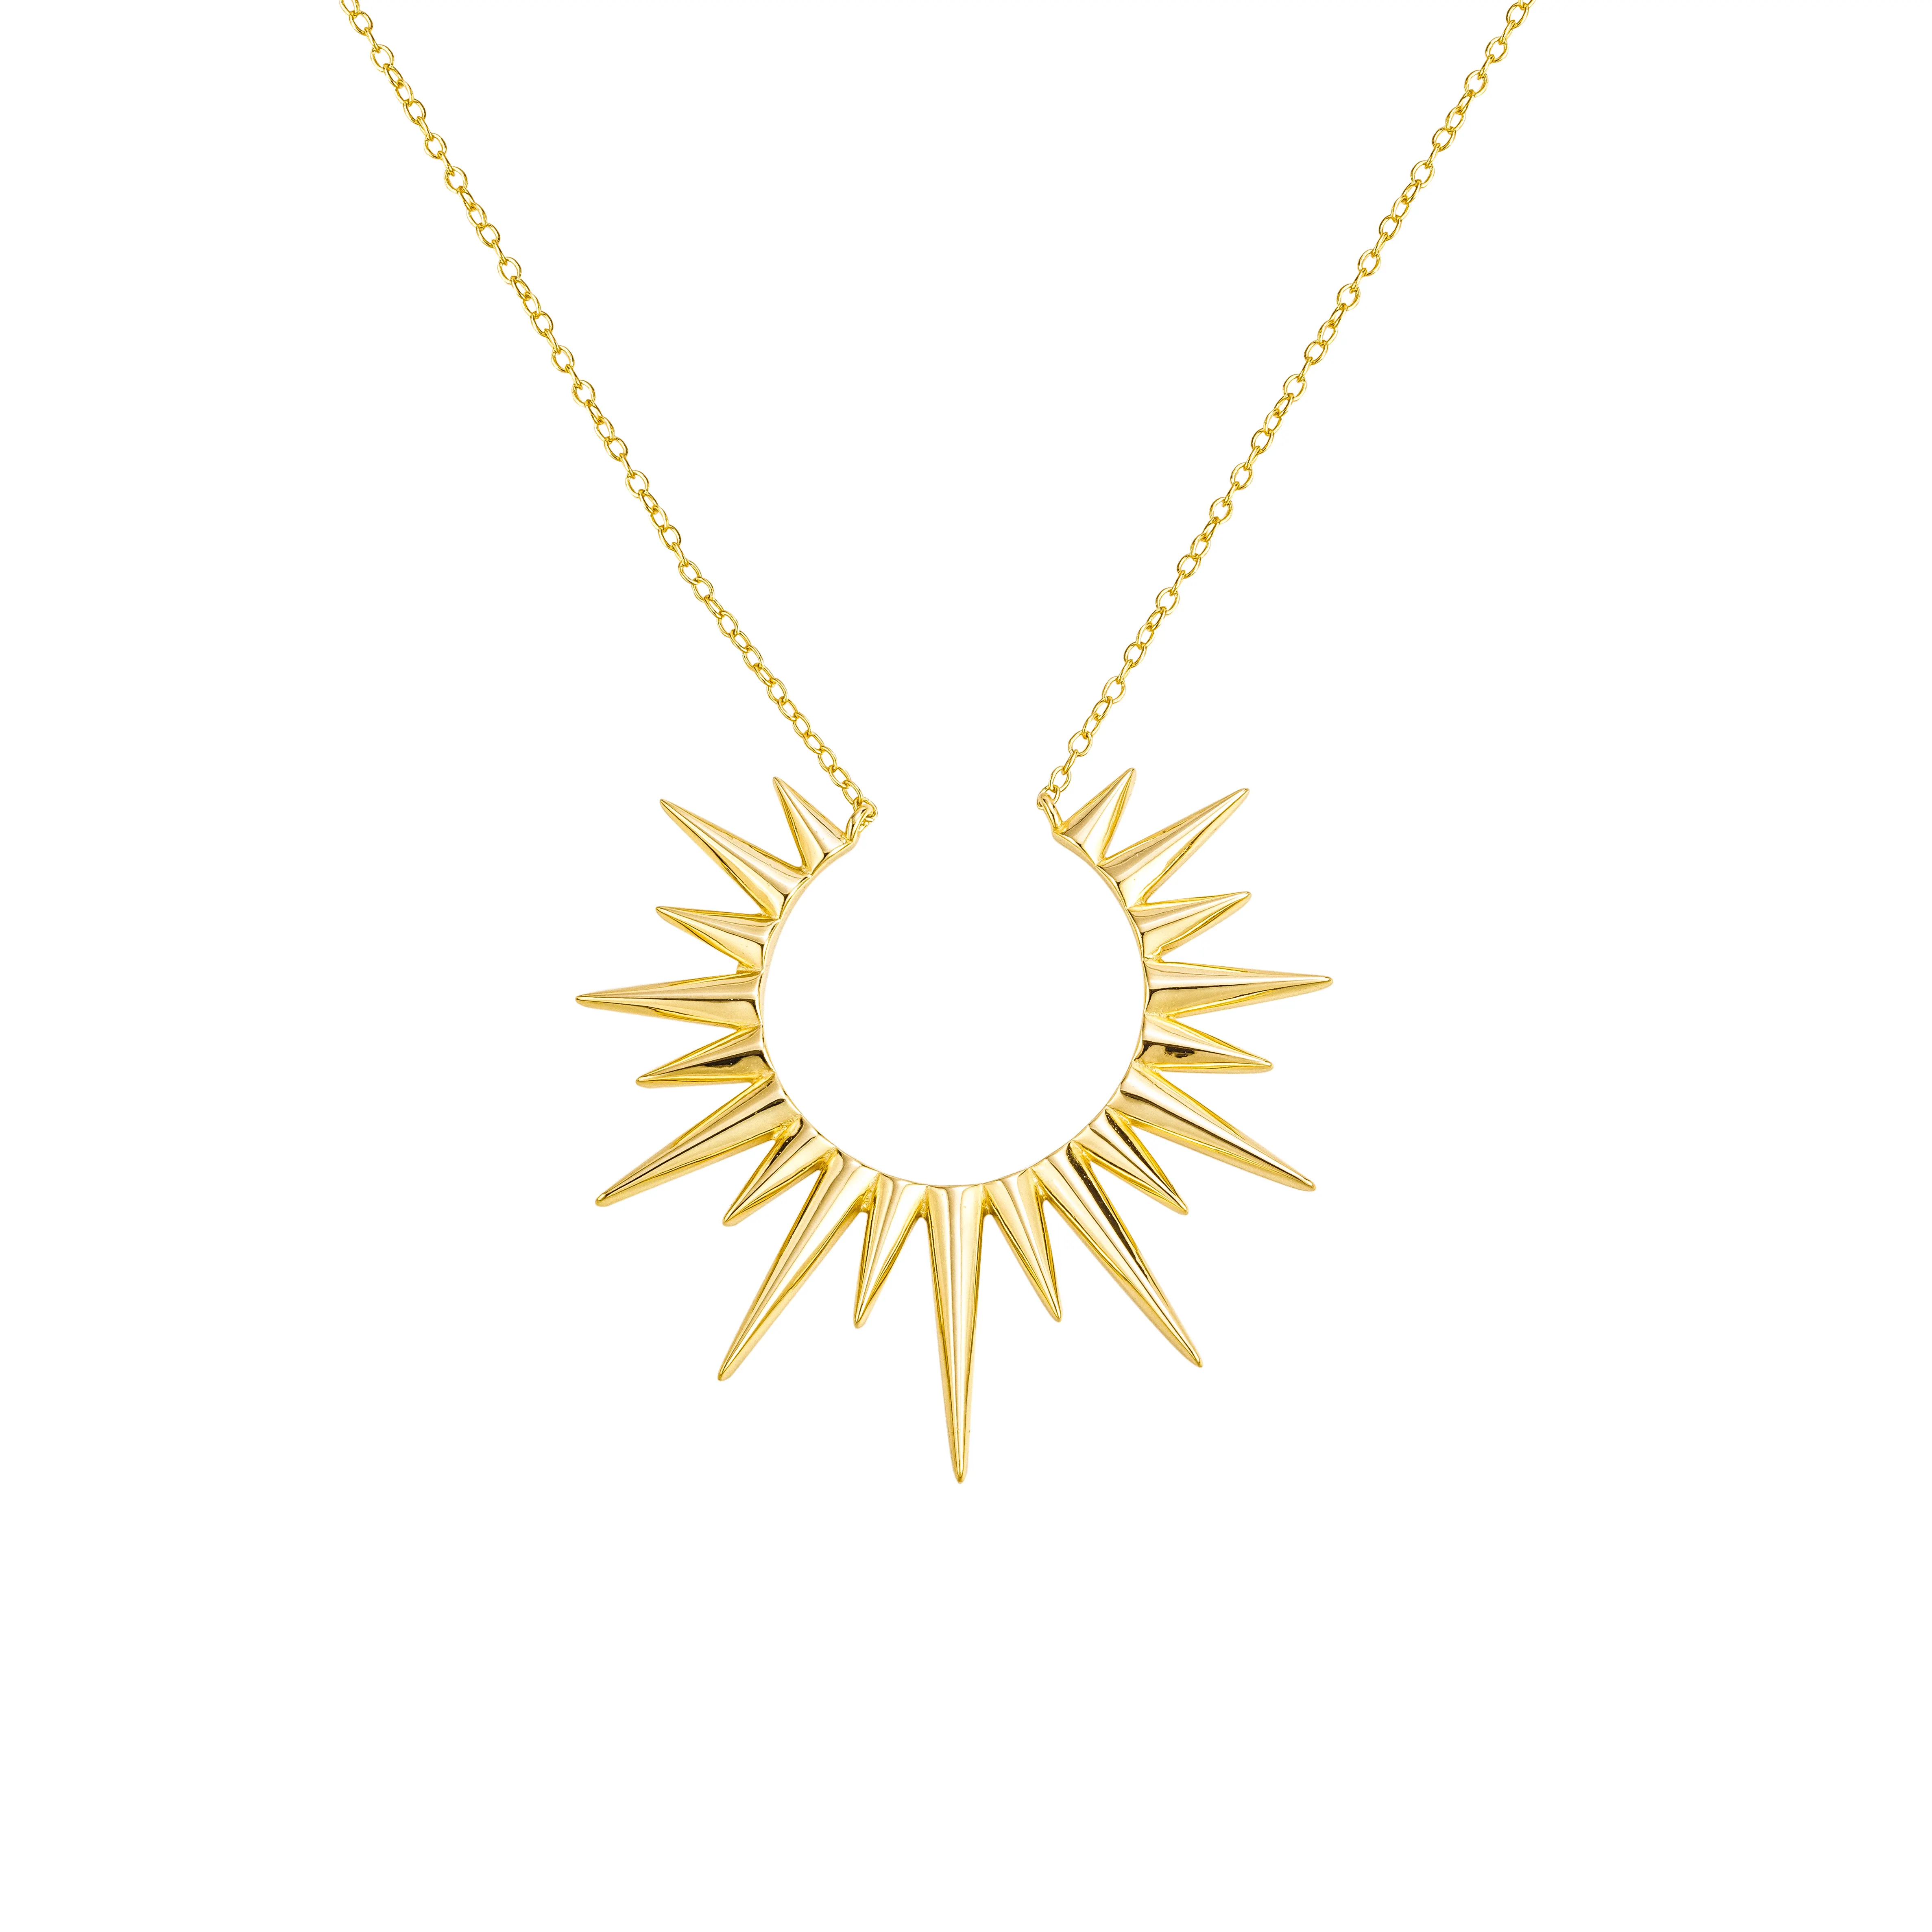 Gemnel 925 silver fashion jewelry women jewelry fashion 18k gold sun shine necklace